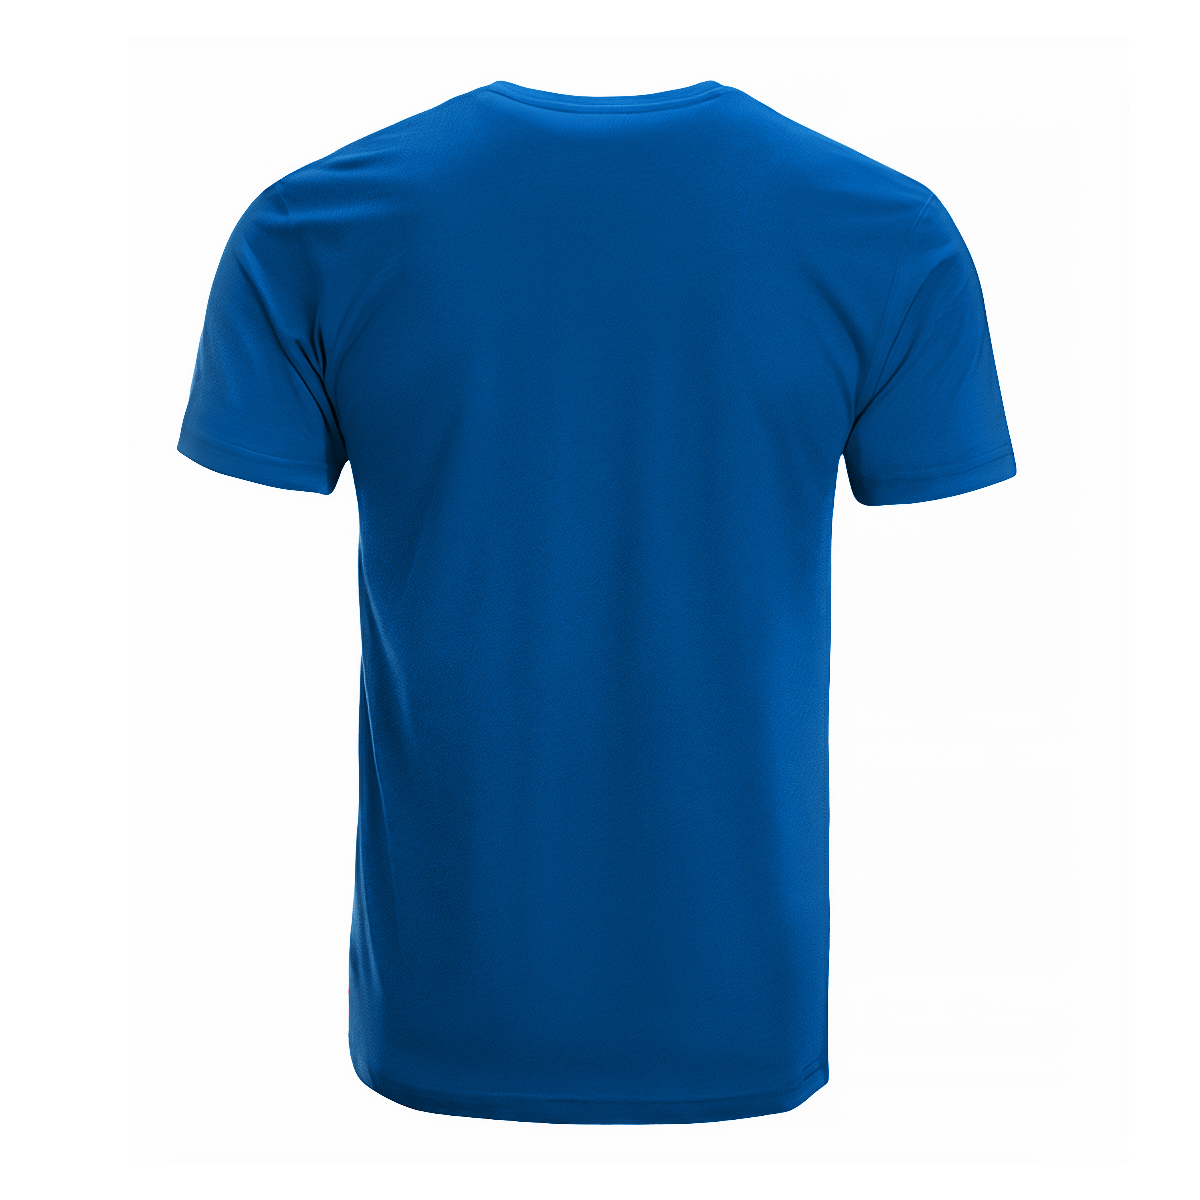 MacDonald (Clan Donald) Tartan Crest T-shirt - I'm not yelling style